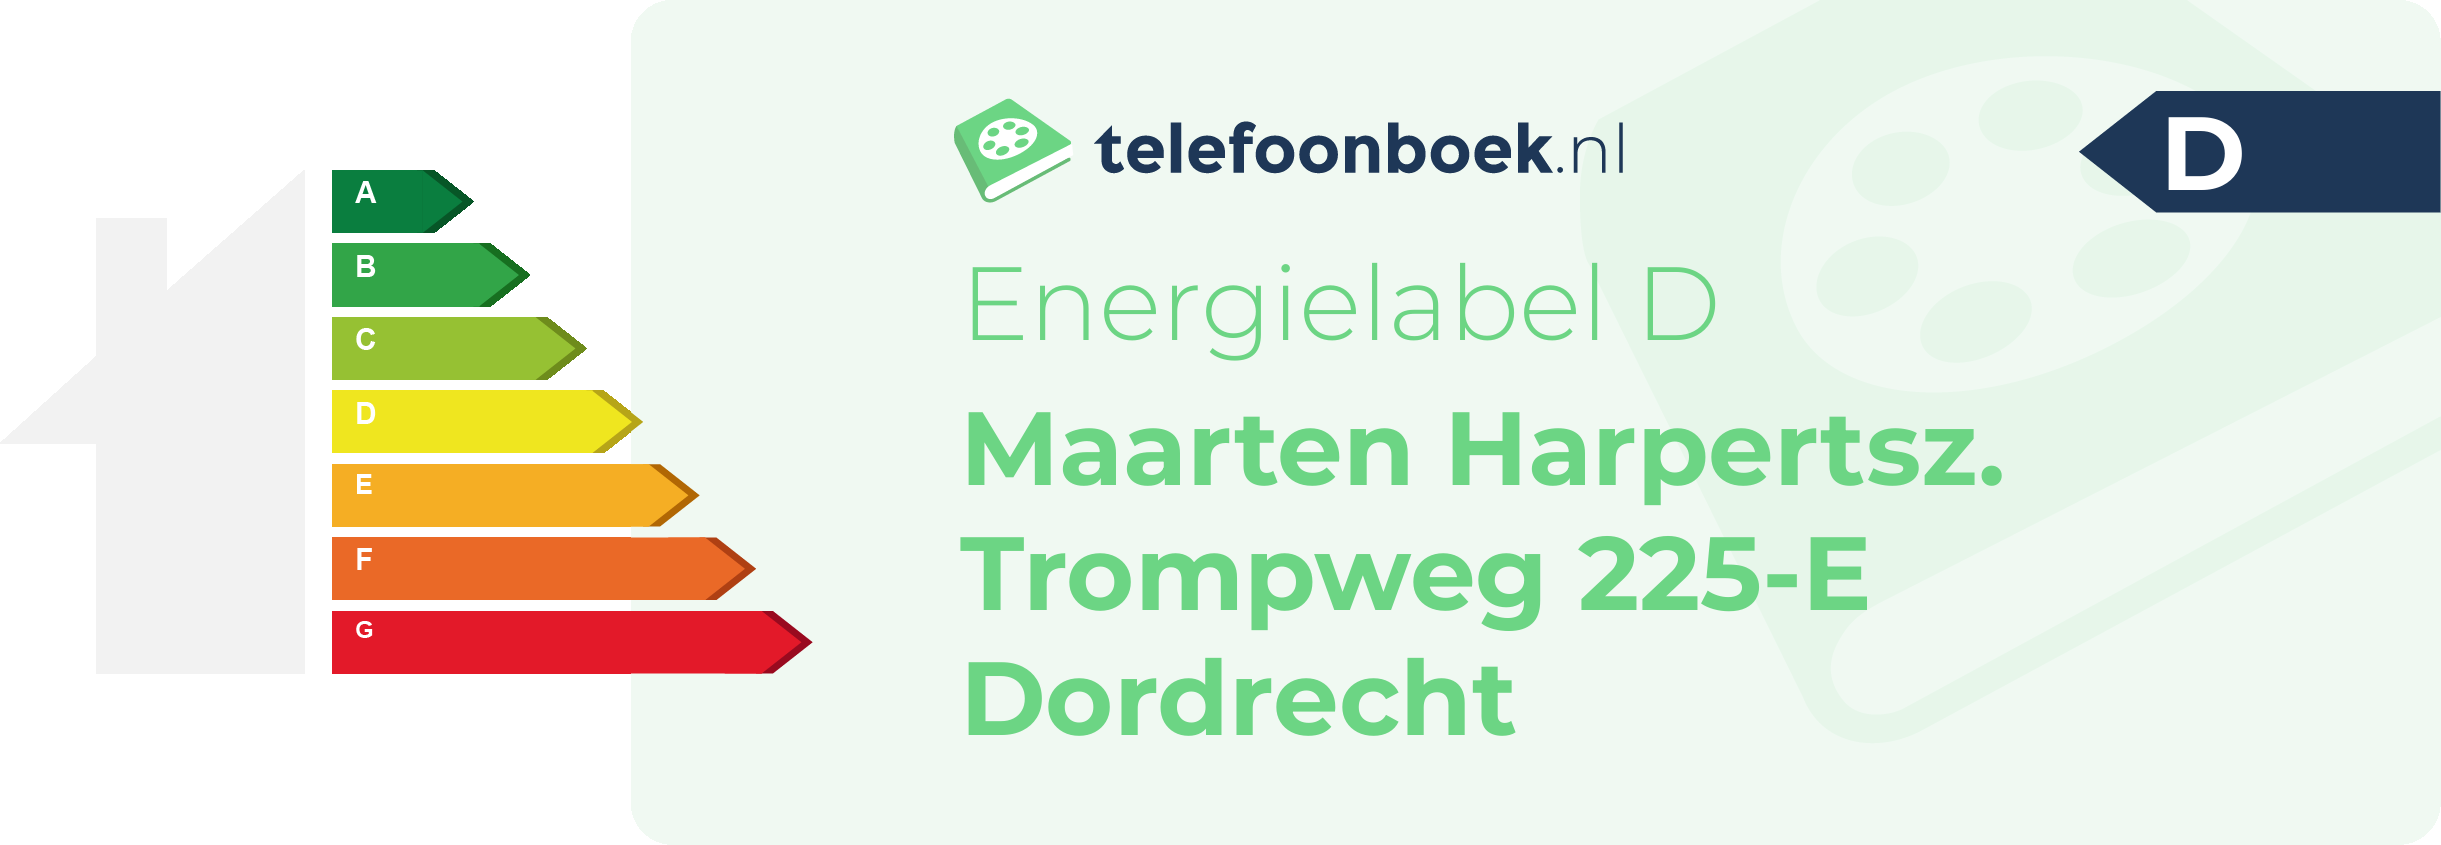 Energielabel Maarten Harpertsz. Trompweg 225-E Dordrecht